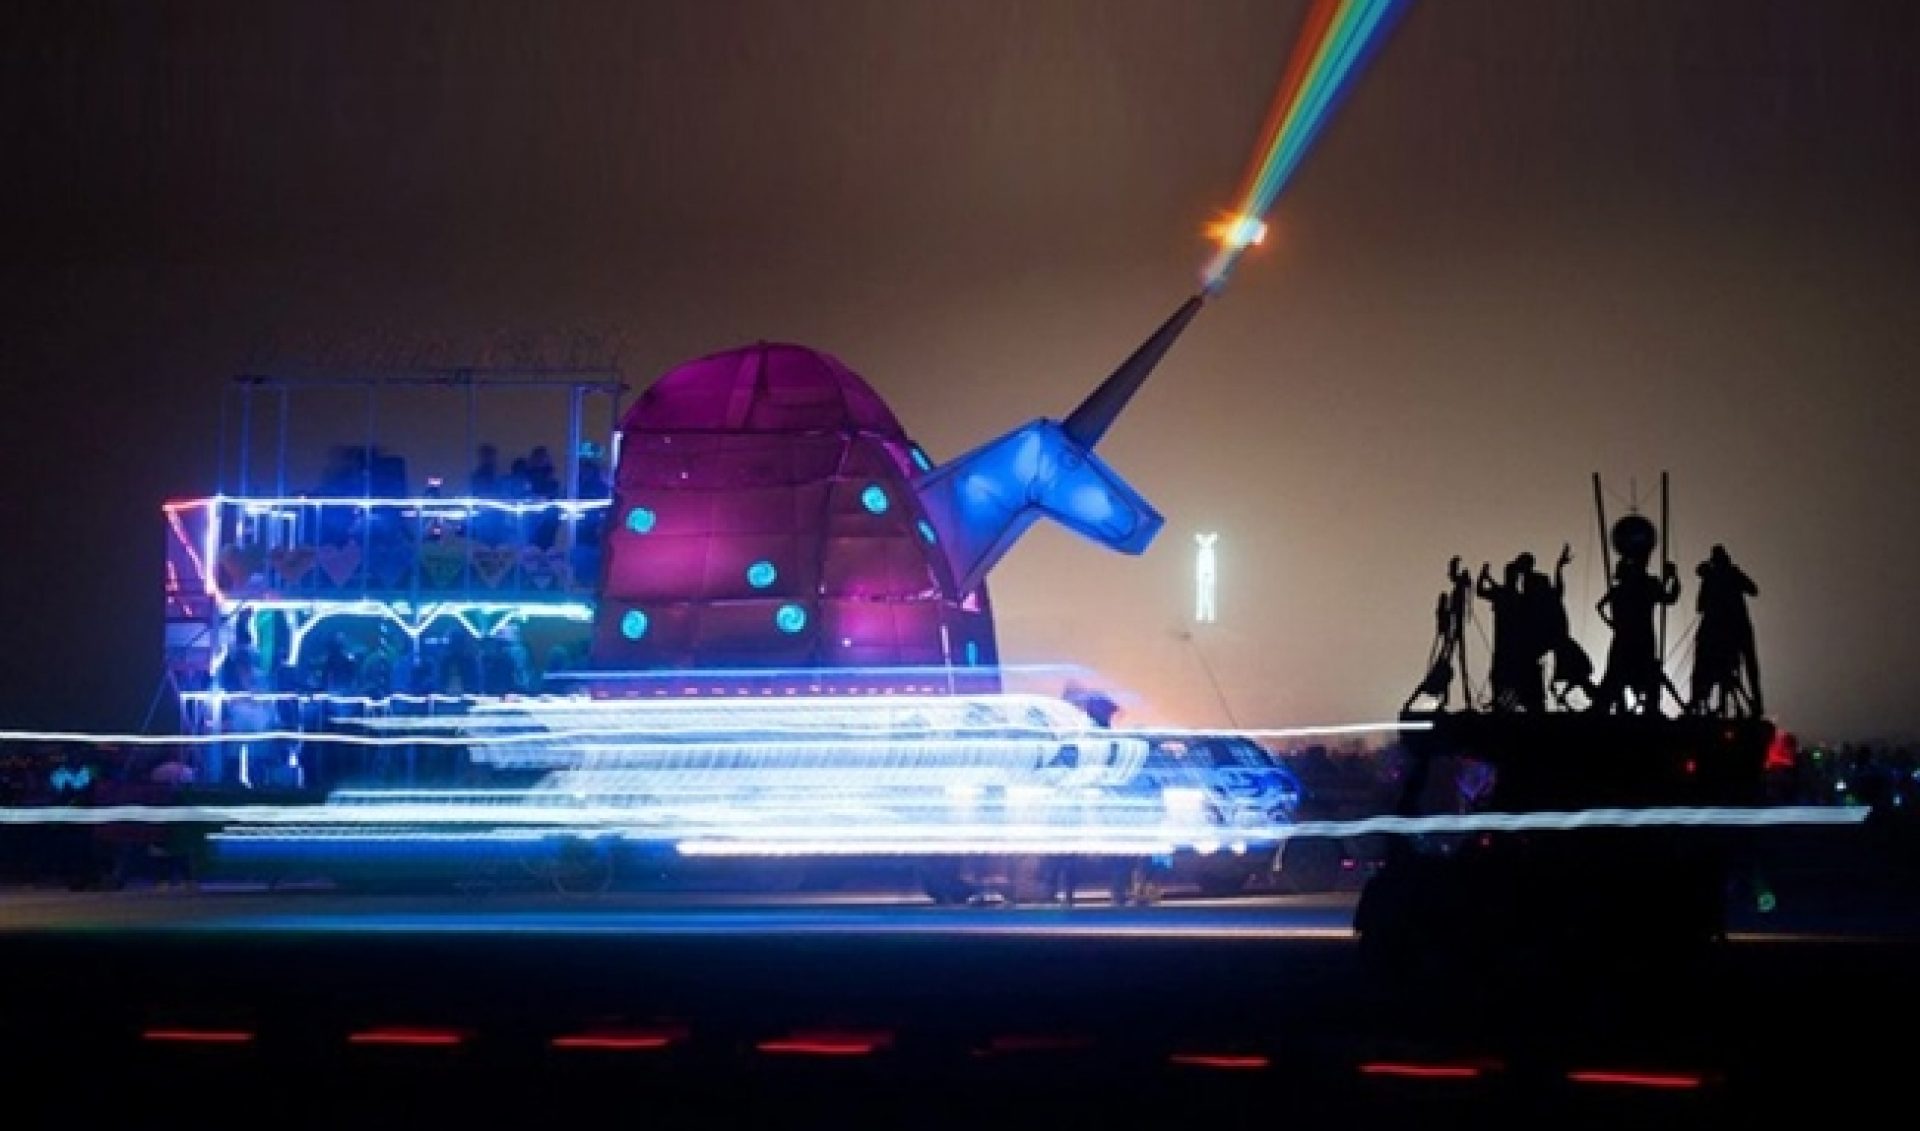 Souped-Up ‘Charlie The Unicorn’ Vehicle Will Return To Burning Man